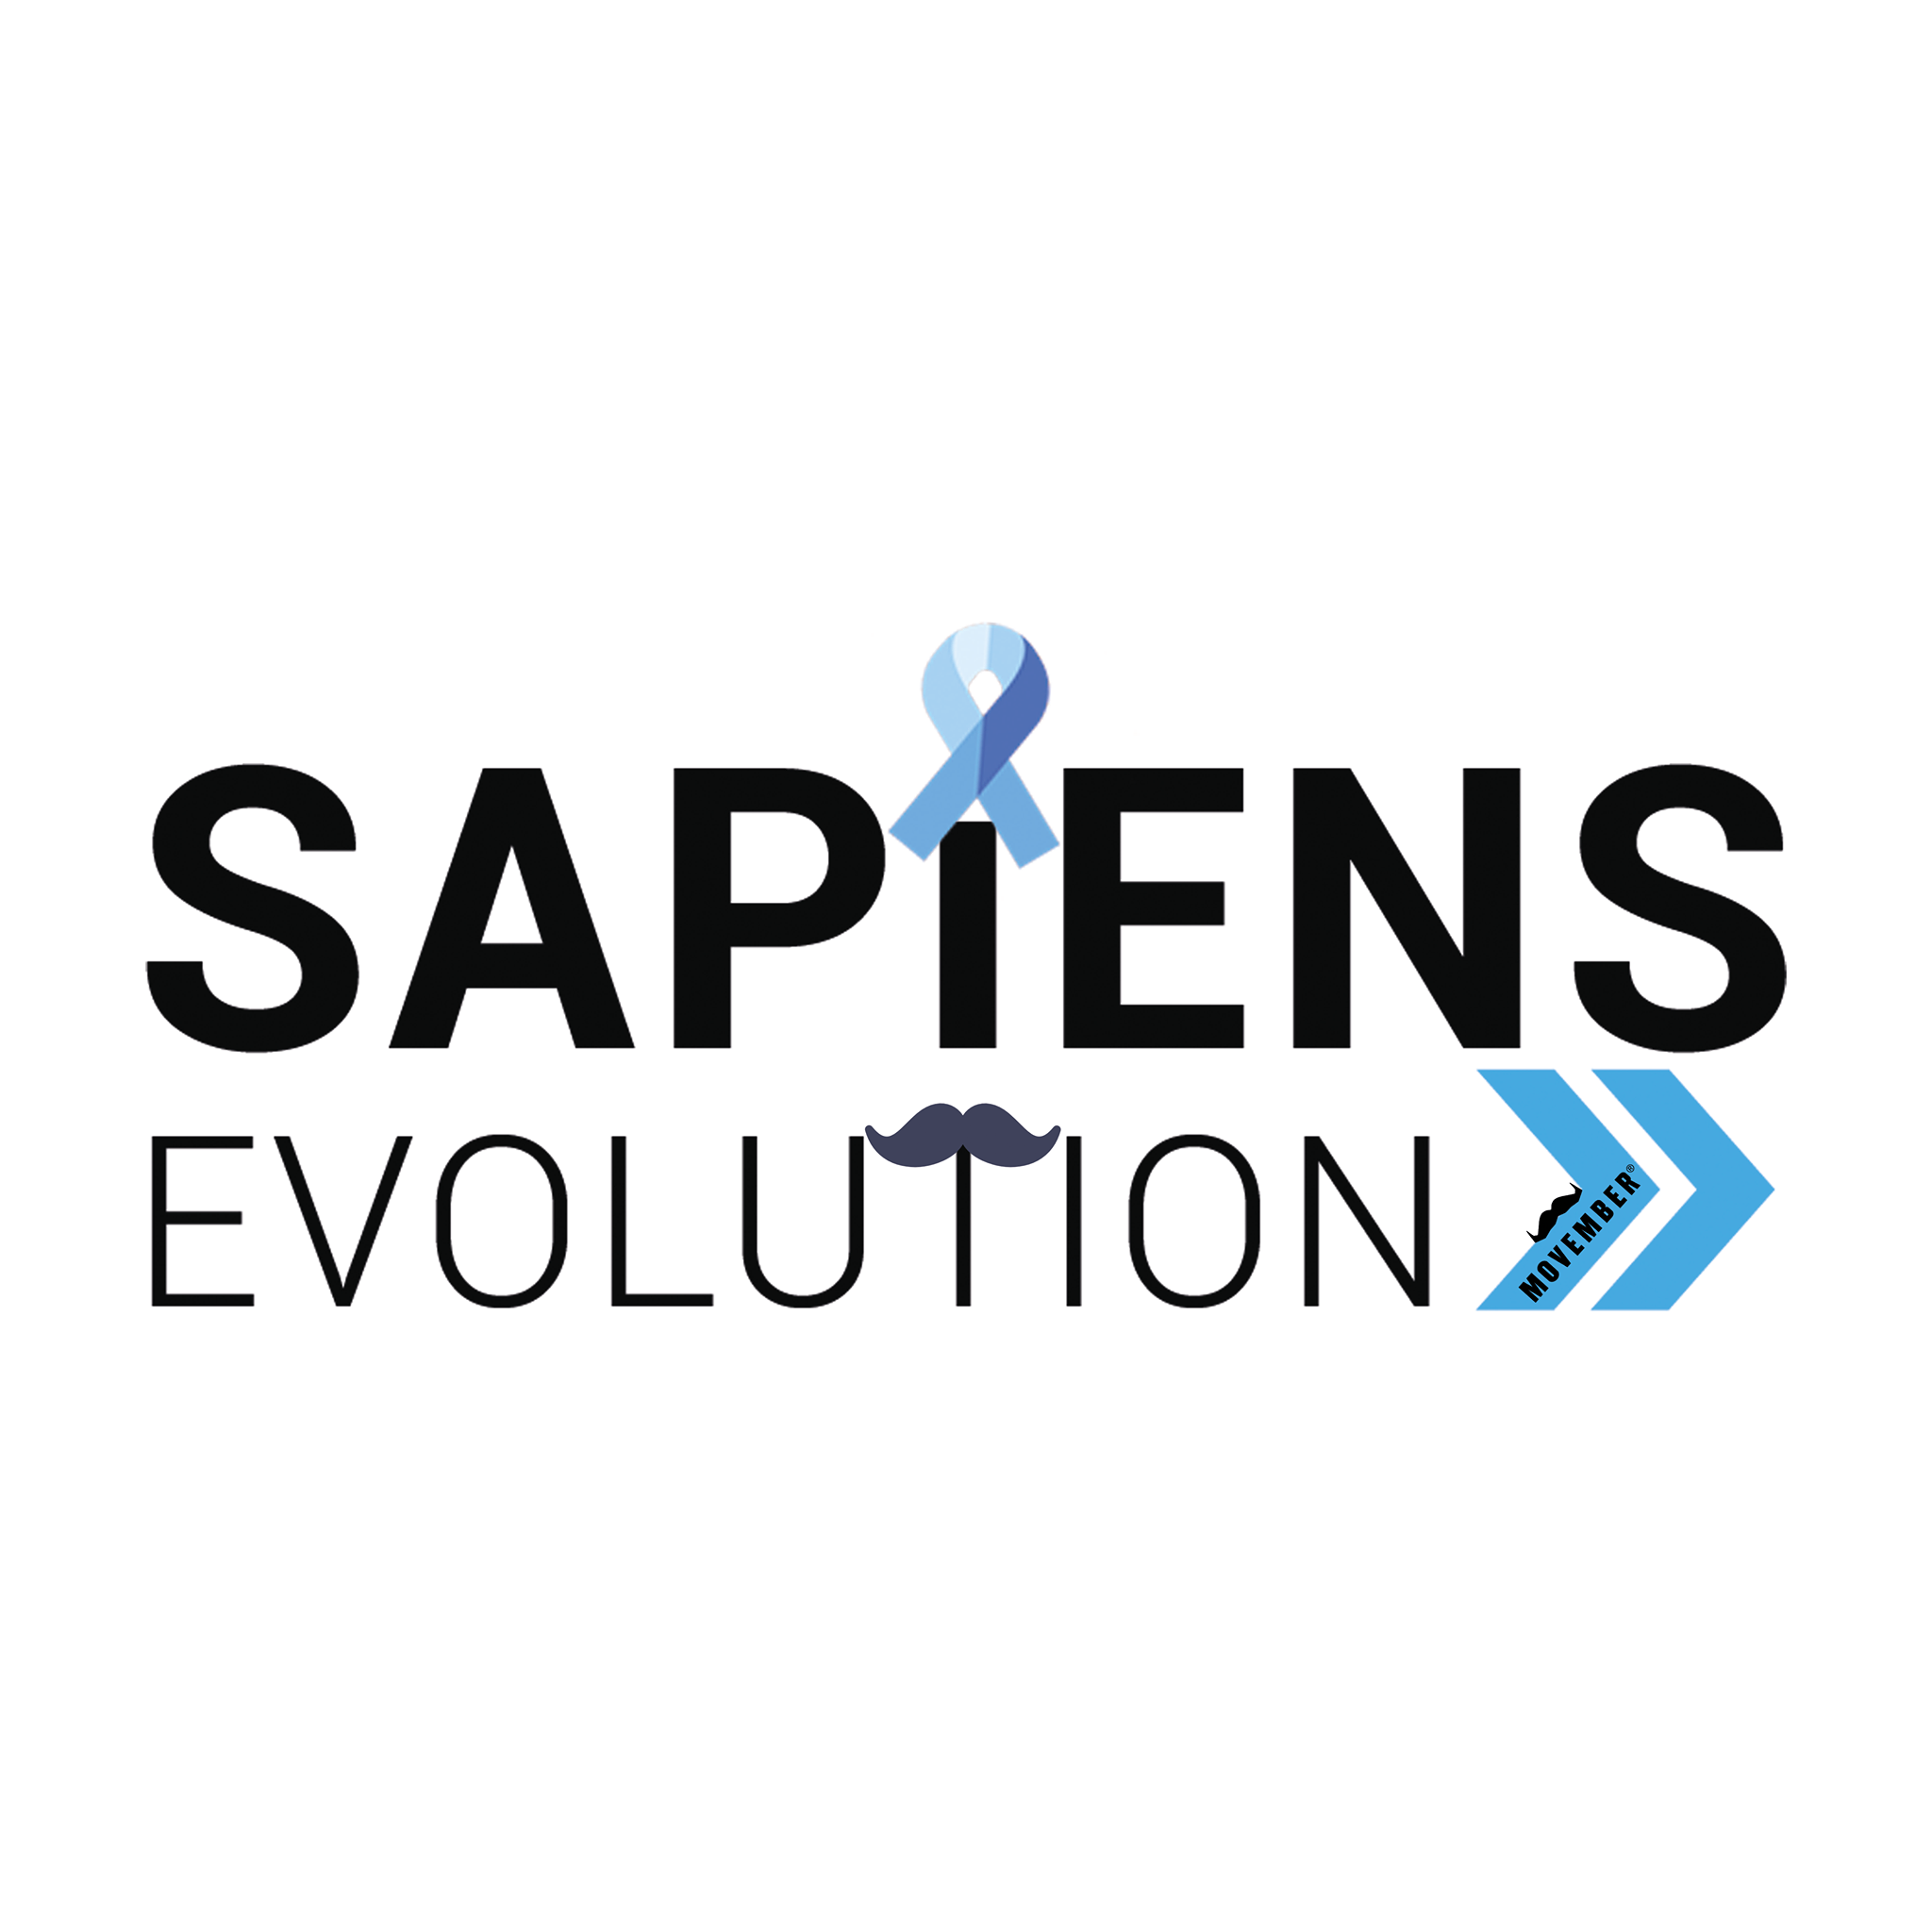 SAPIENS EVOLUTION